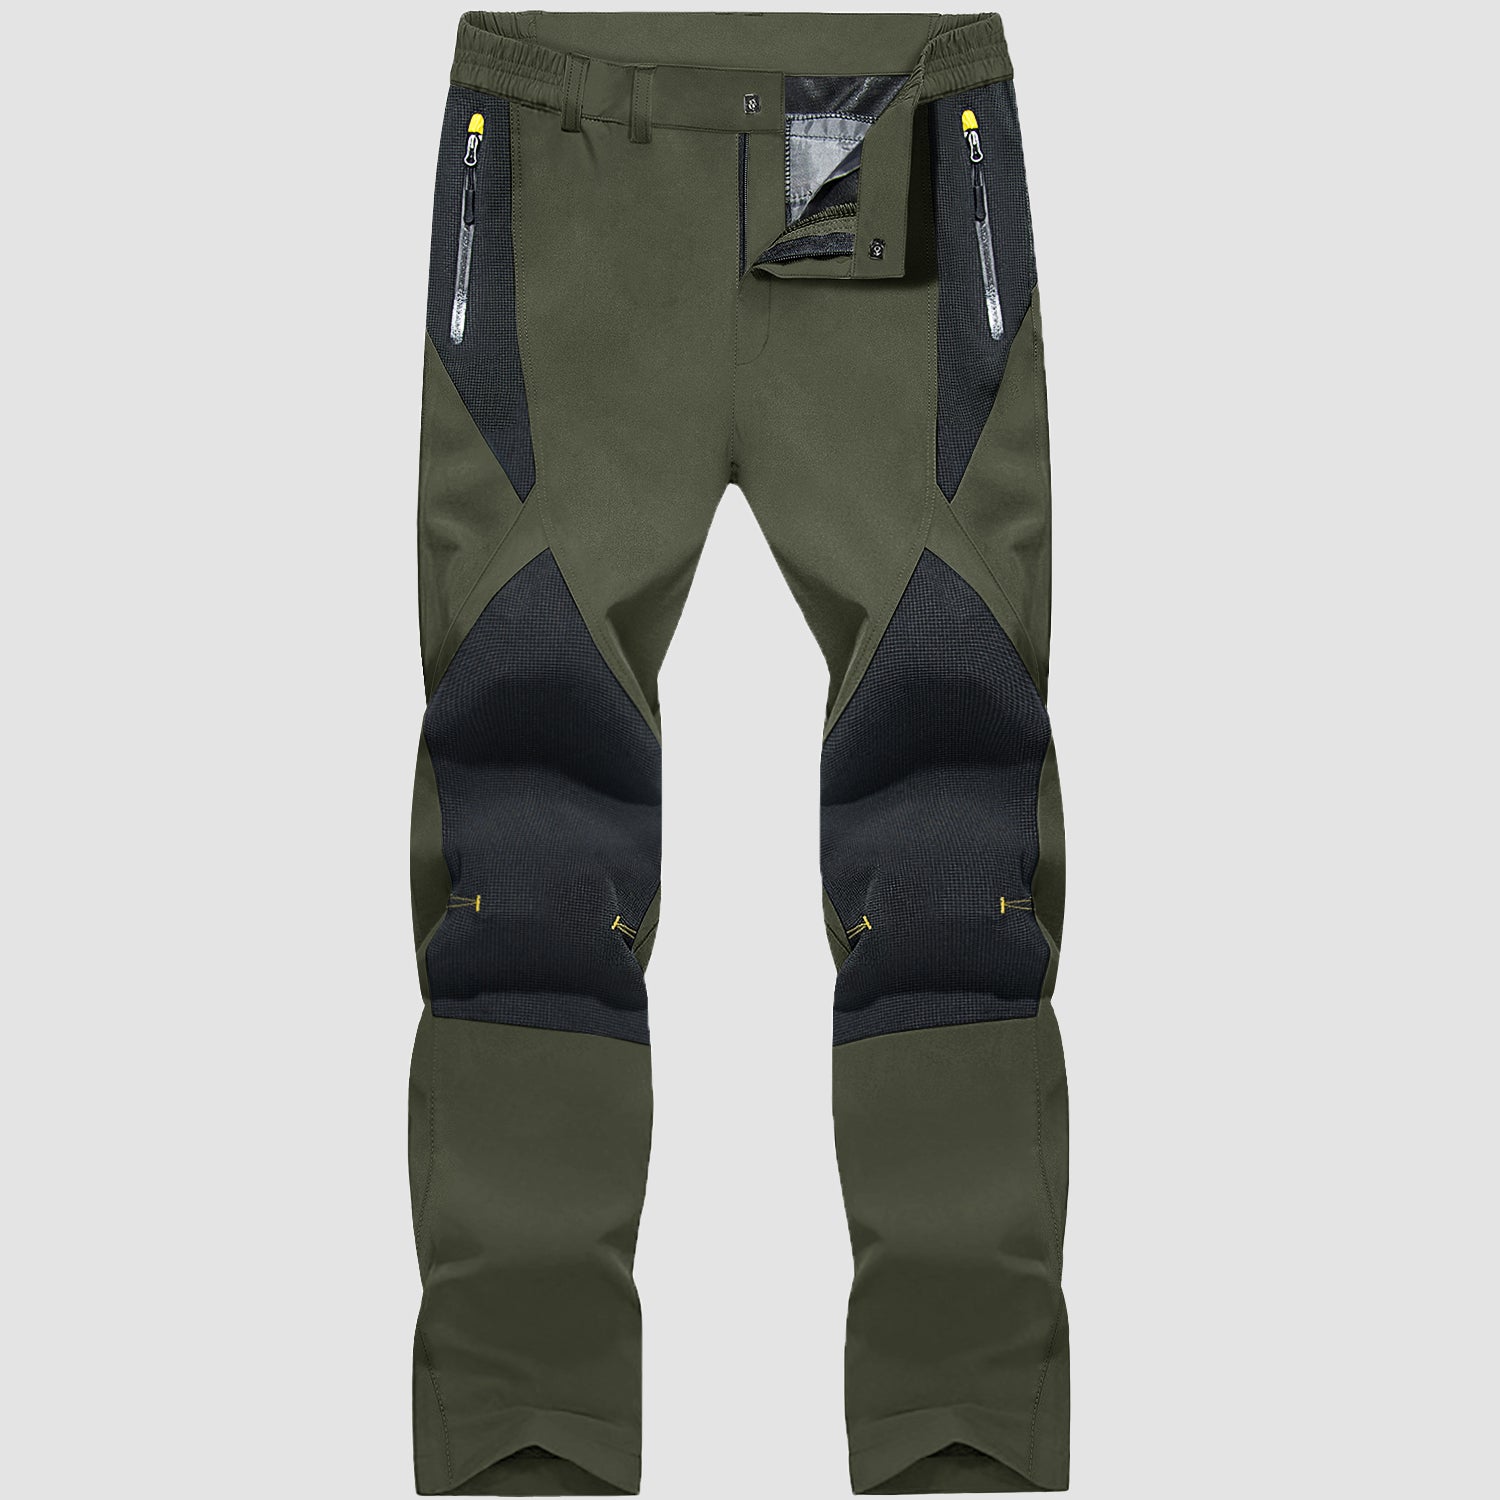 EQWLJWE Hiking Pants for Men锛孧ens Outdoor Quick Dry Waterproof Work Pants,Lightweight  Sweatpants Men Zipper Pockets - Walmart.com